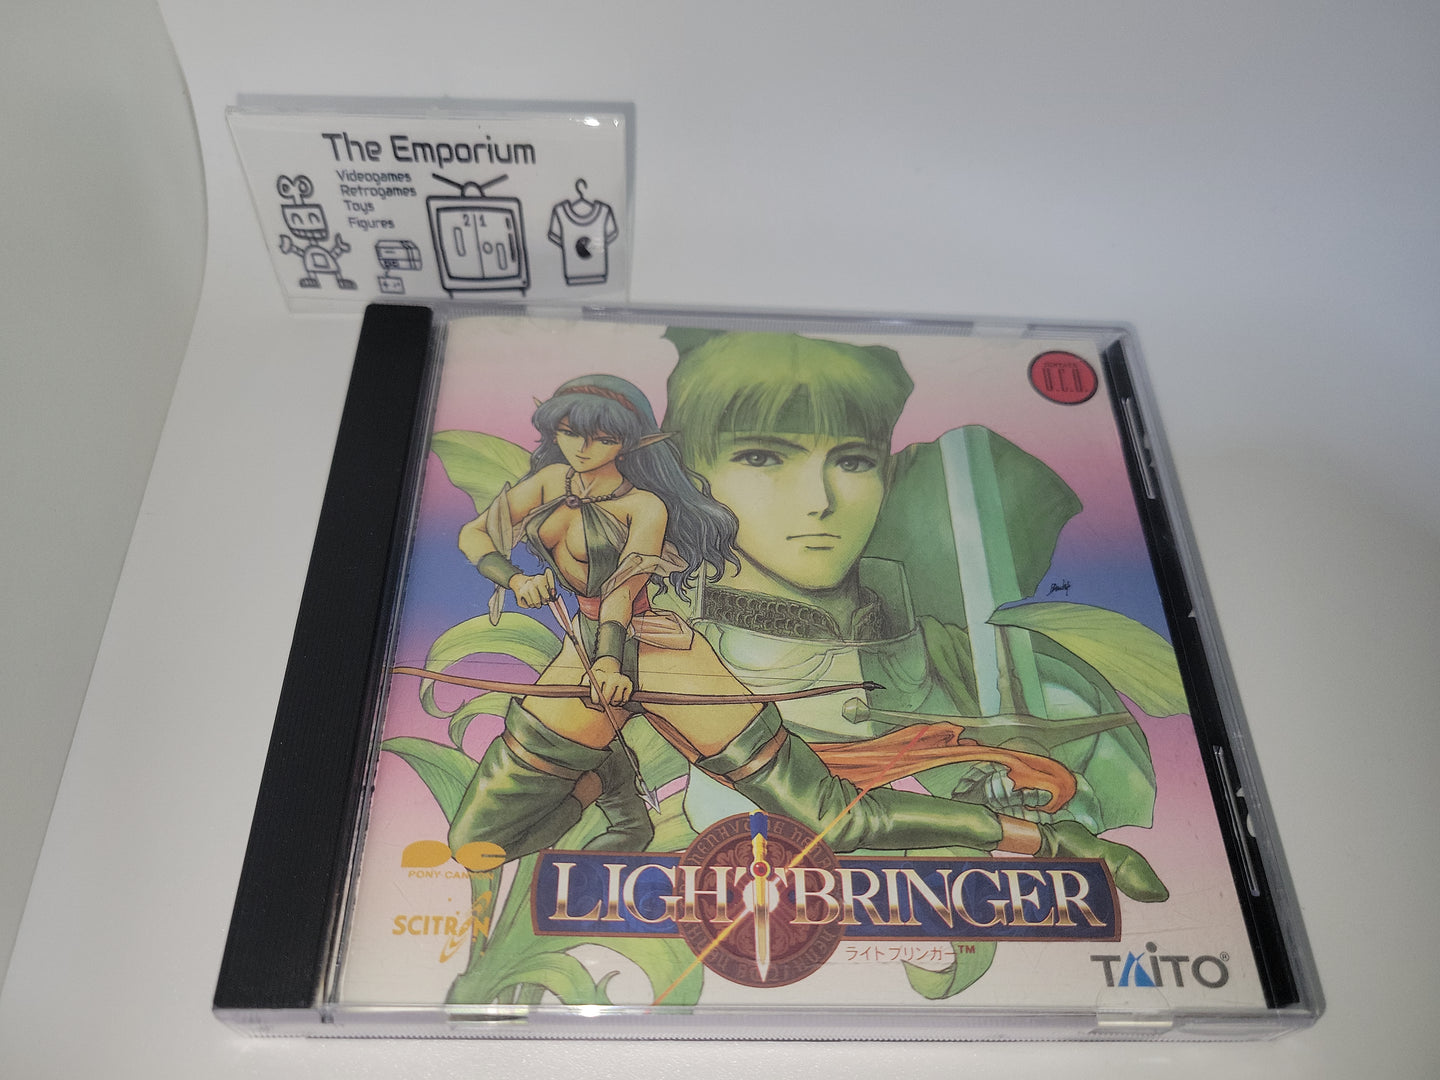 Light Bringer - Music cd soundtrack